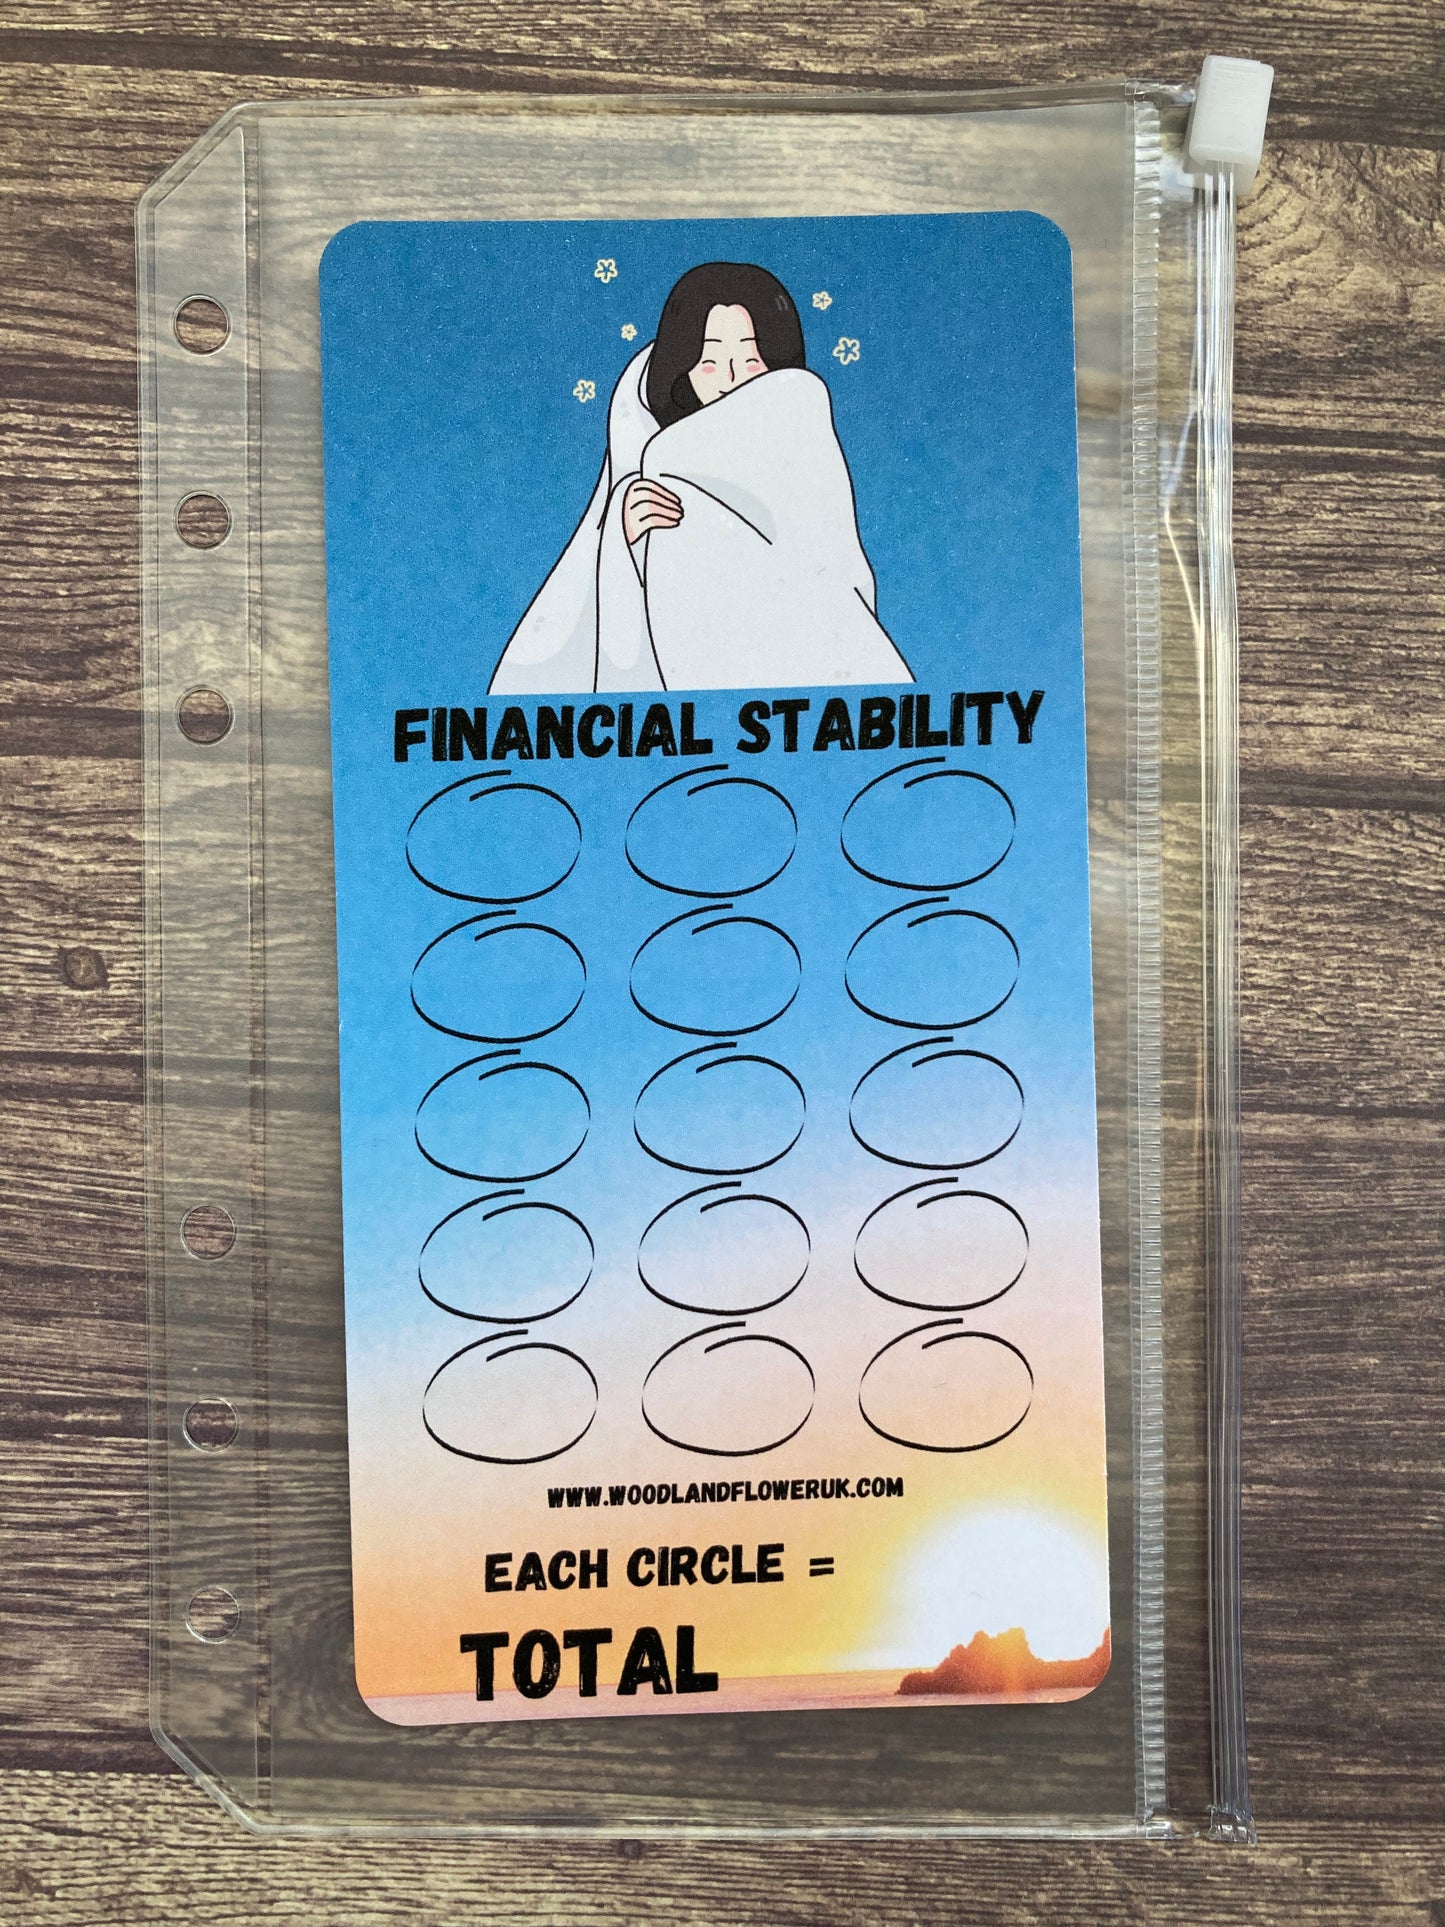 Saving challenge “financial stability”